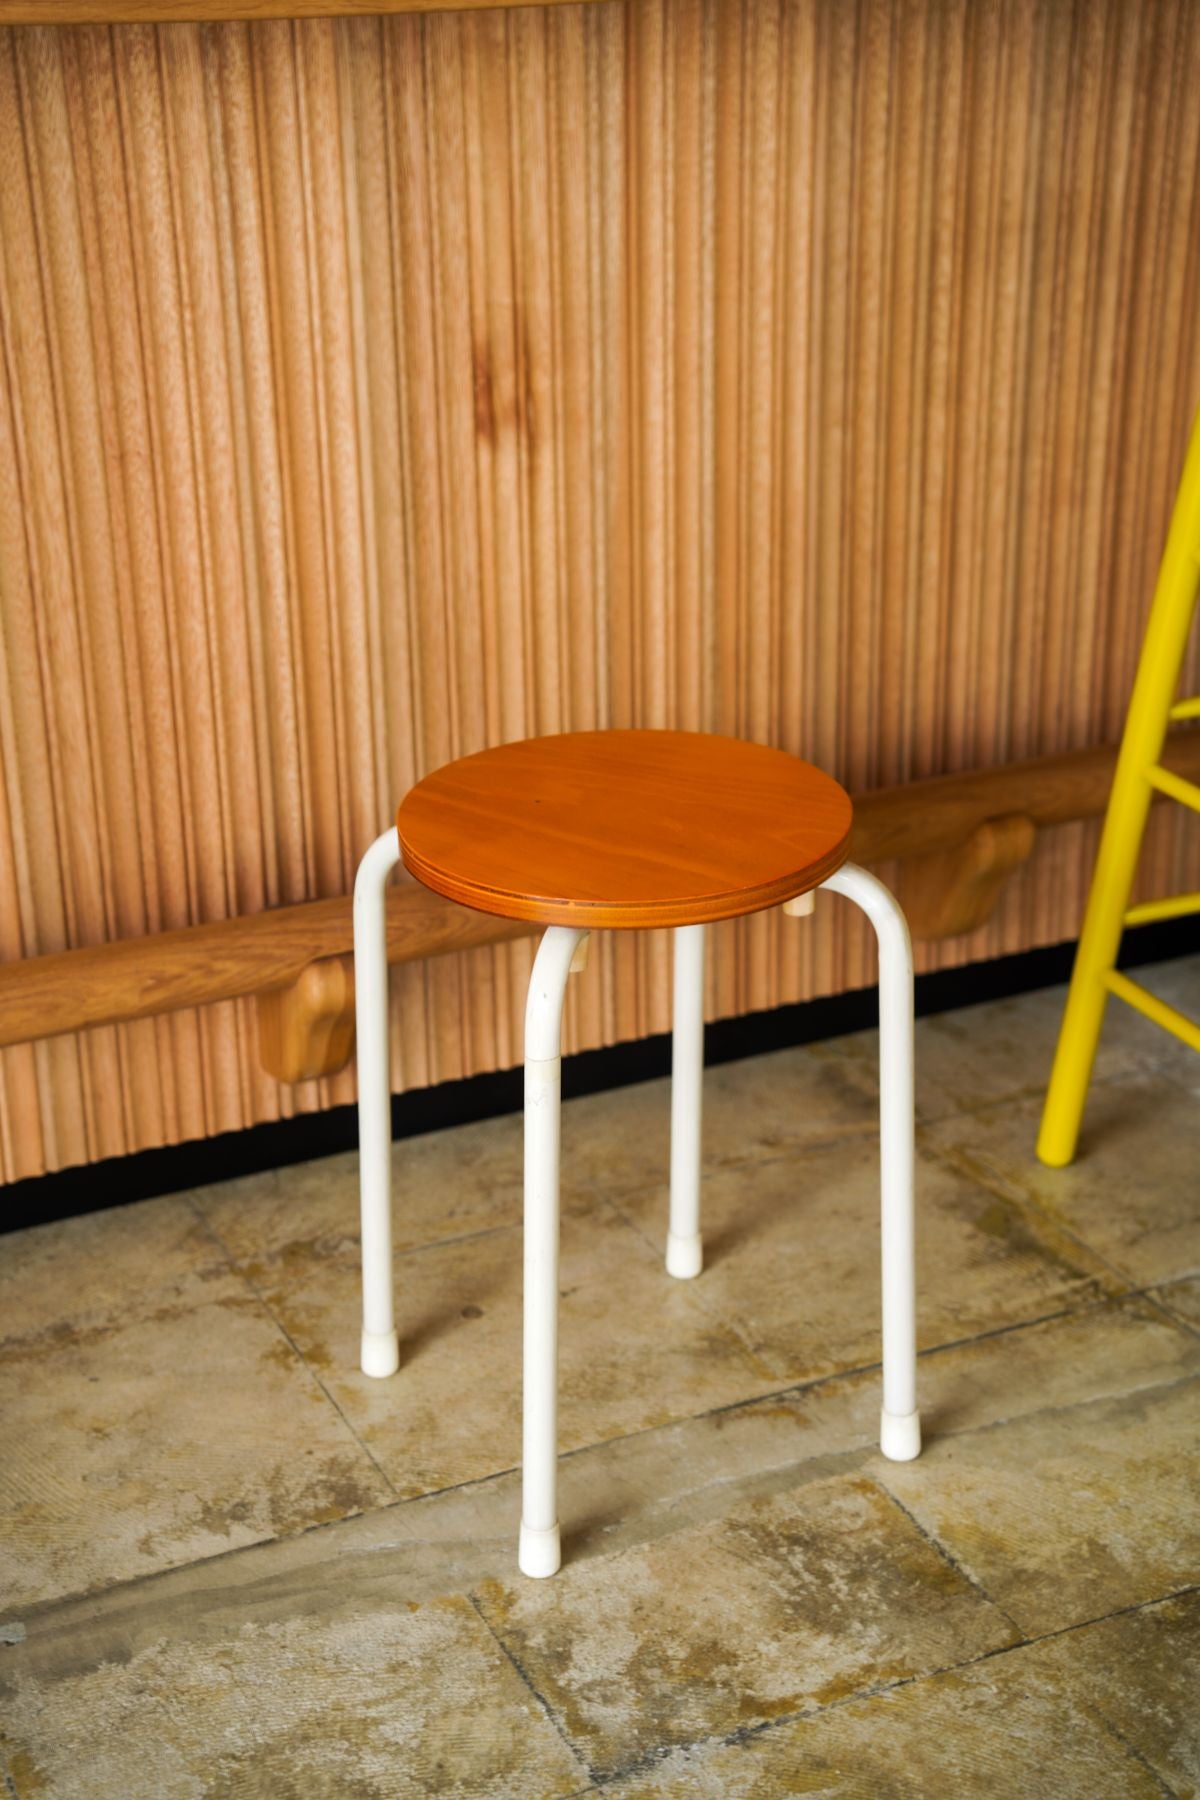 Vintage metal & wood stool